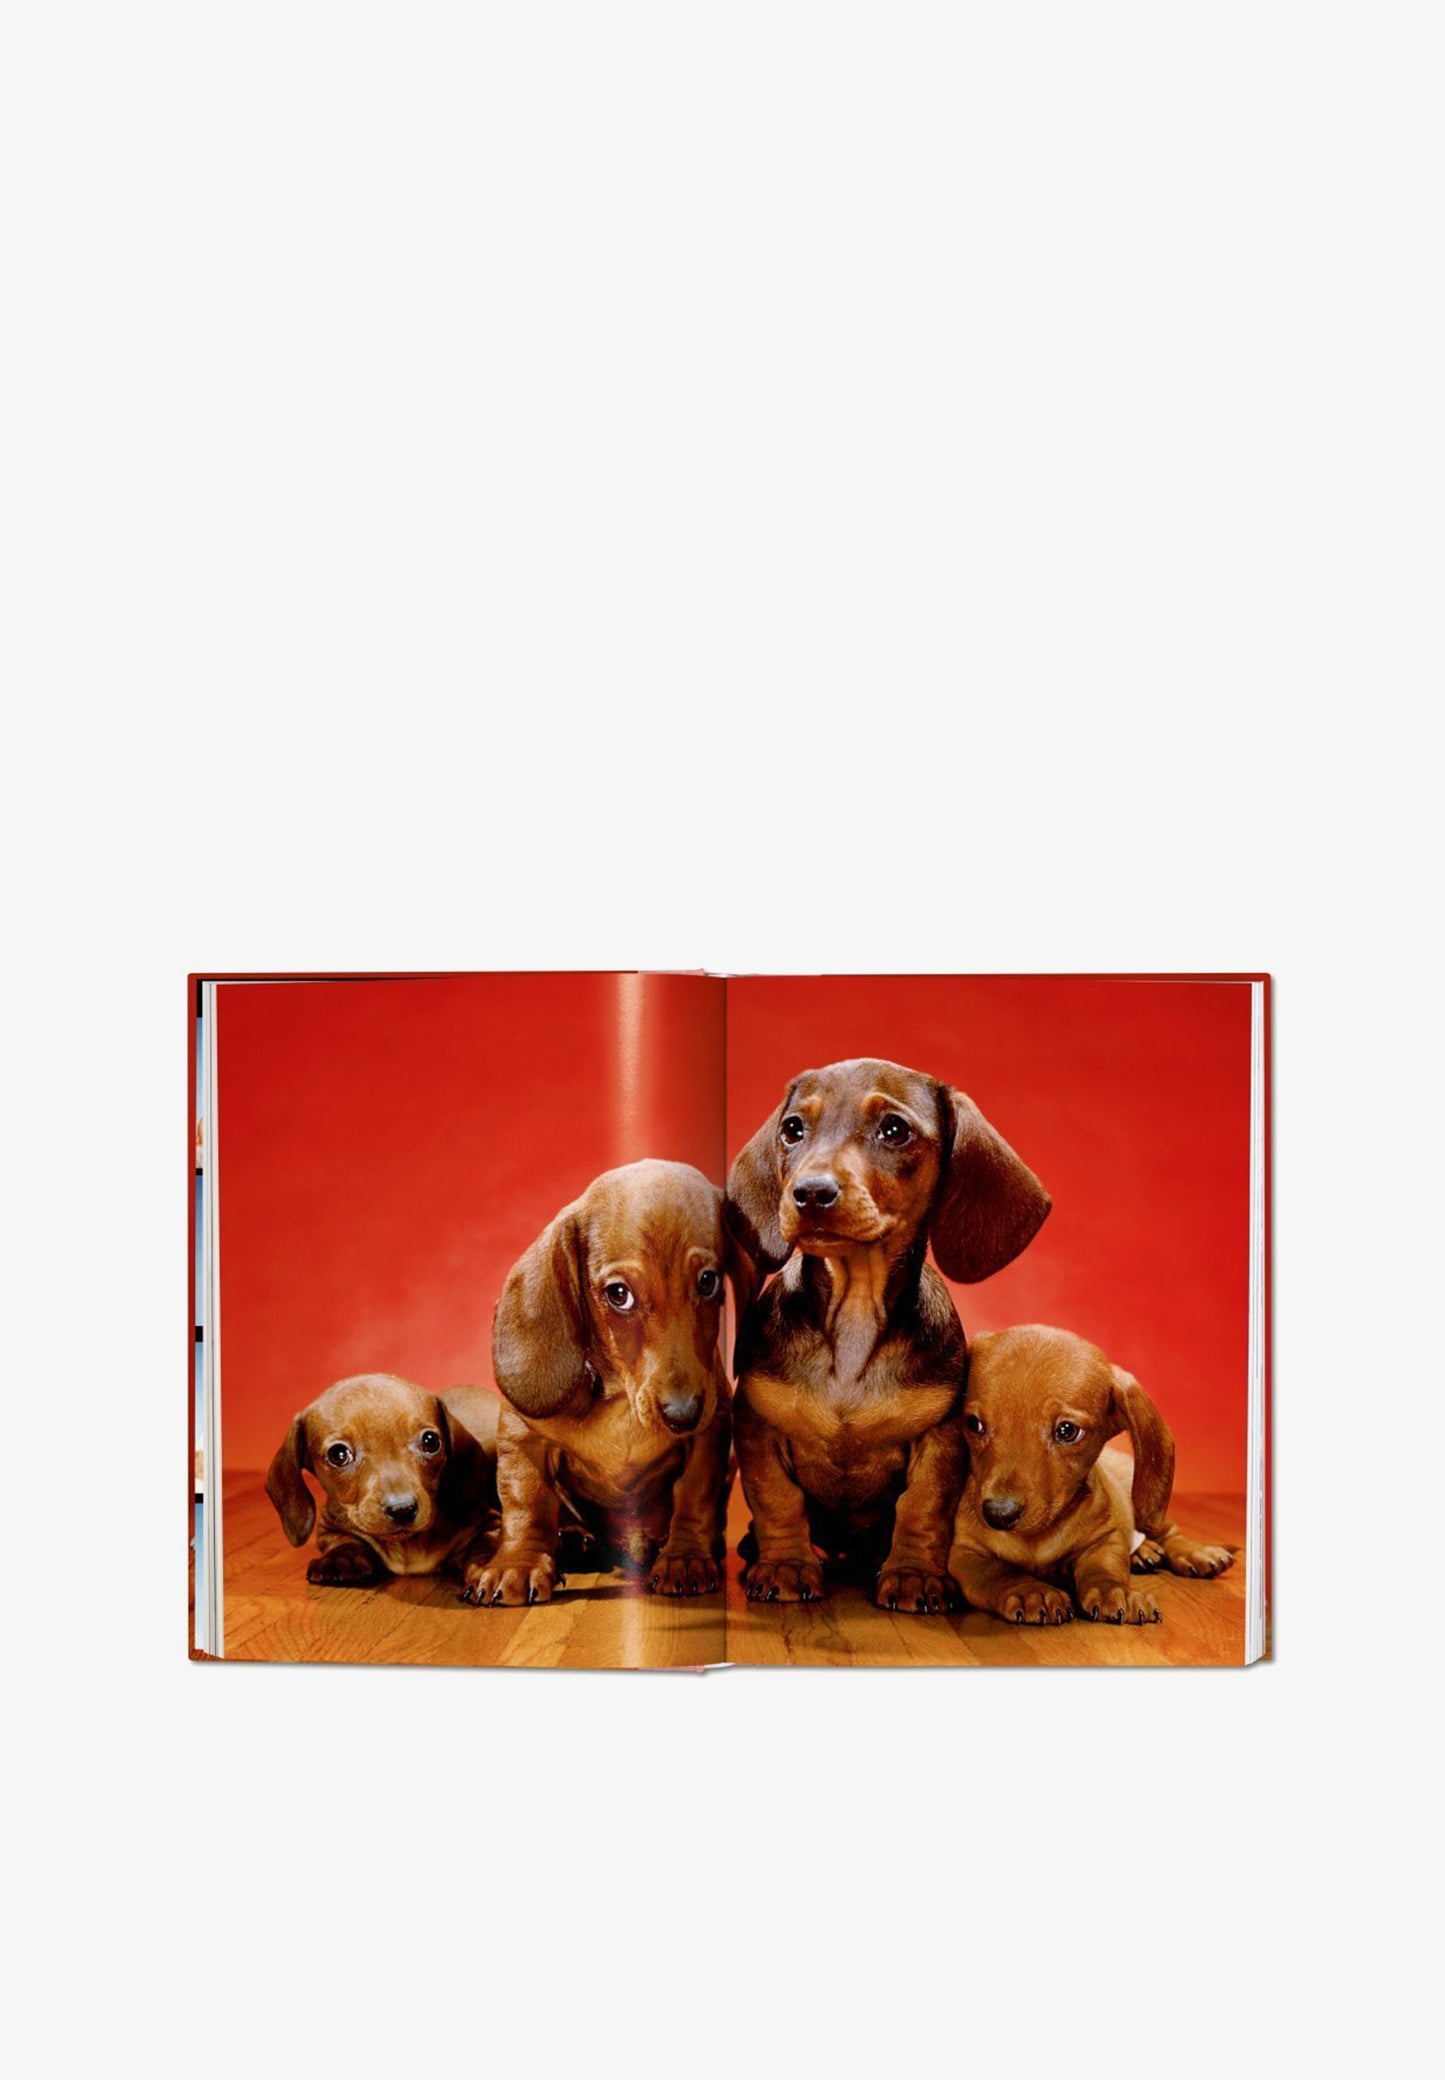 TASCHEN | LIBRO WALTER CHANDOHA DOGS